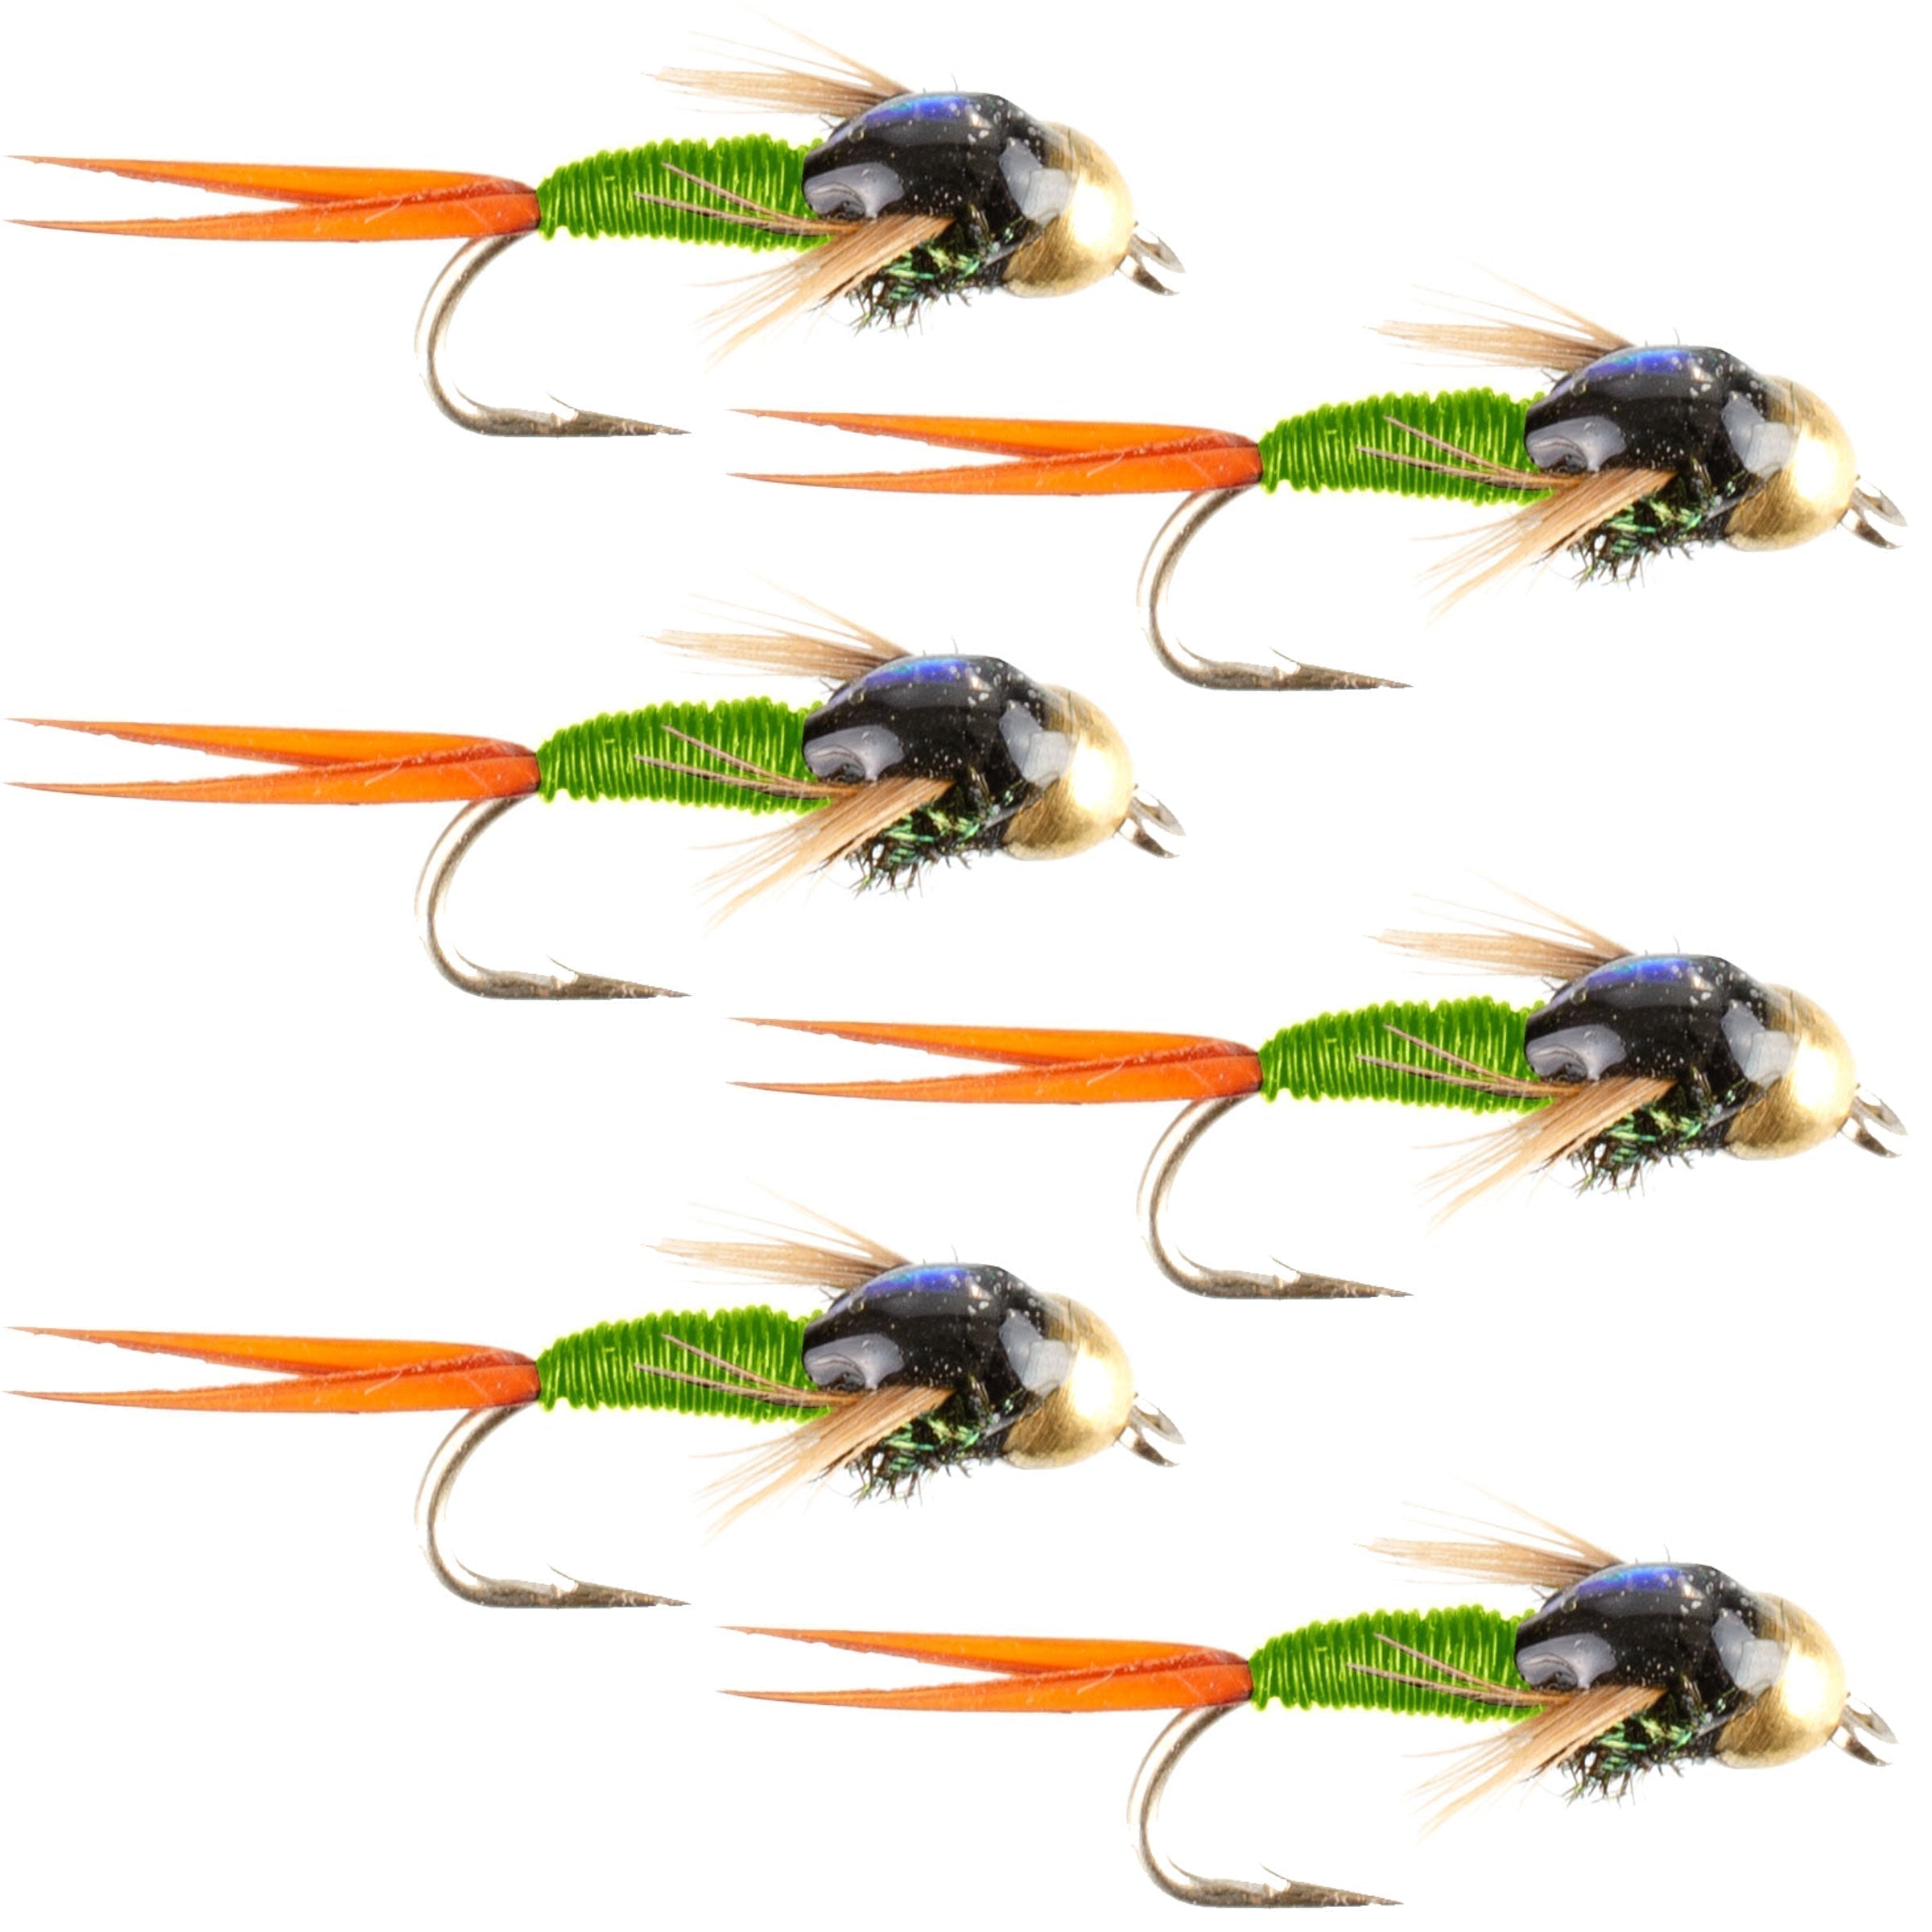 Tungsten Bead Head Chartreuse Copper John Nymph Fly Fishing Flies - Set of 6 Flies Hook Size 14